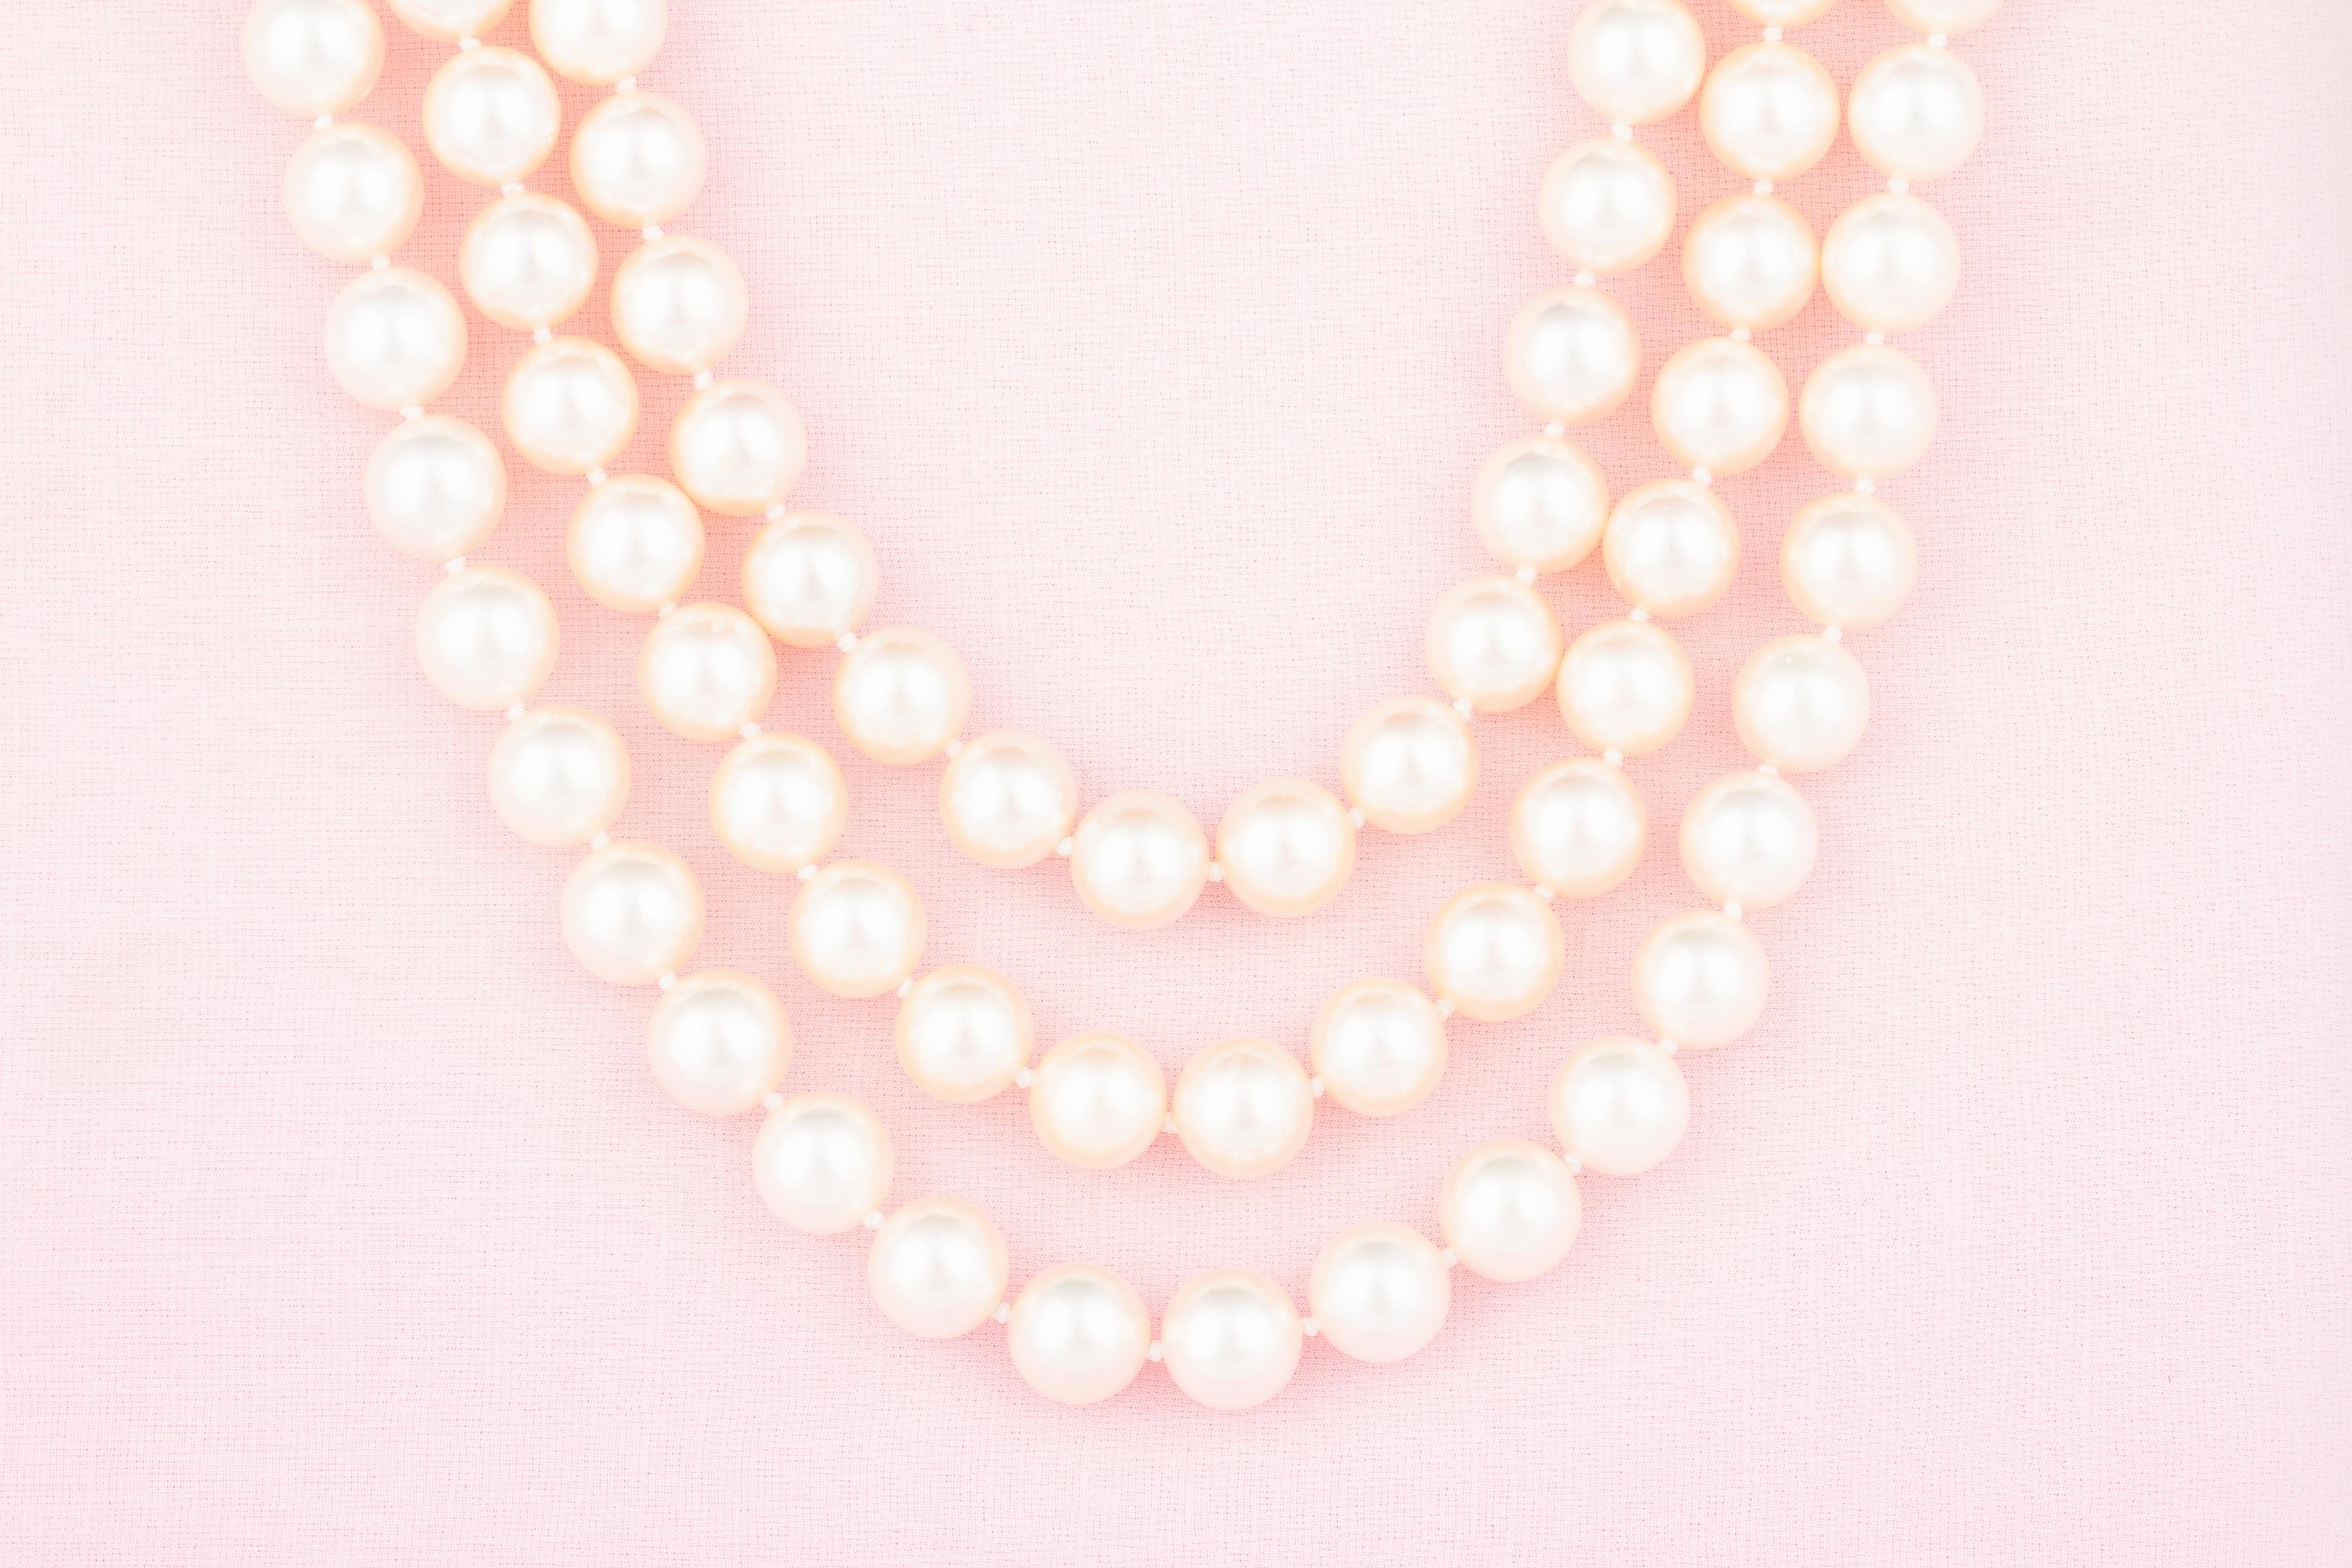 mangatrai pearl necklace